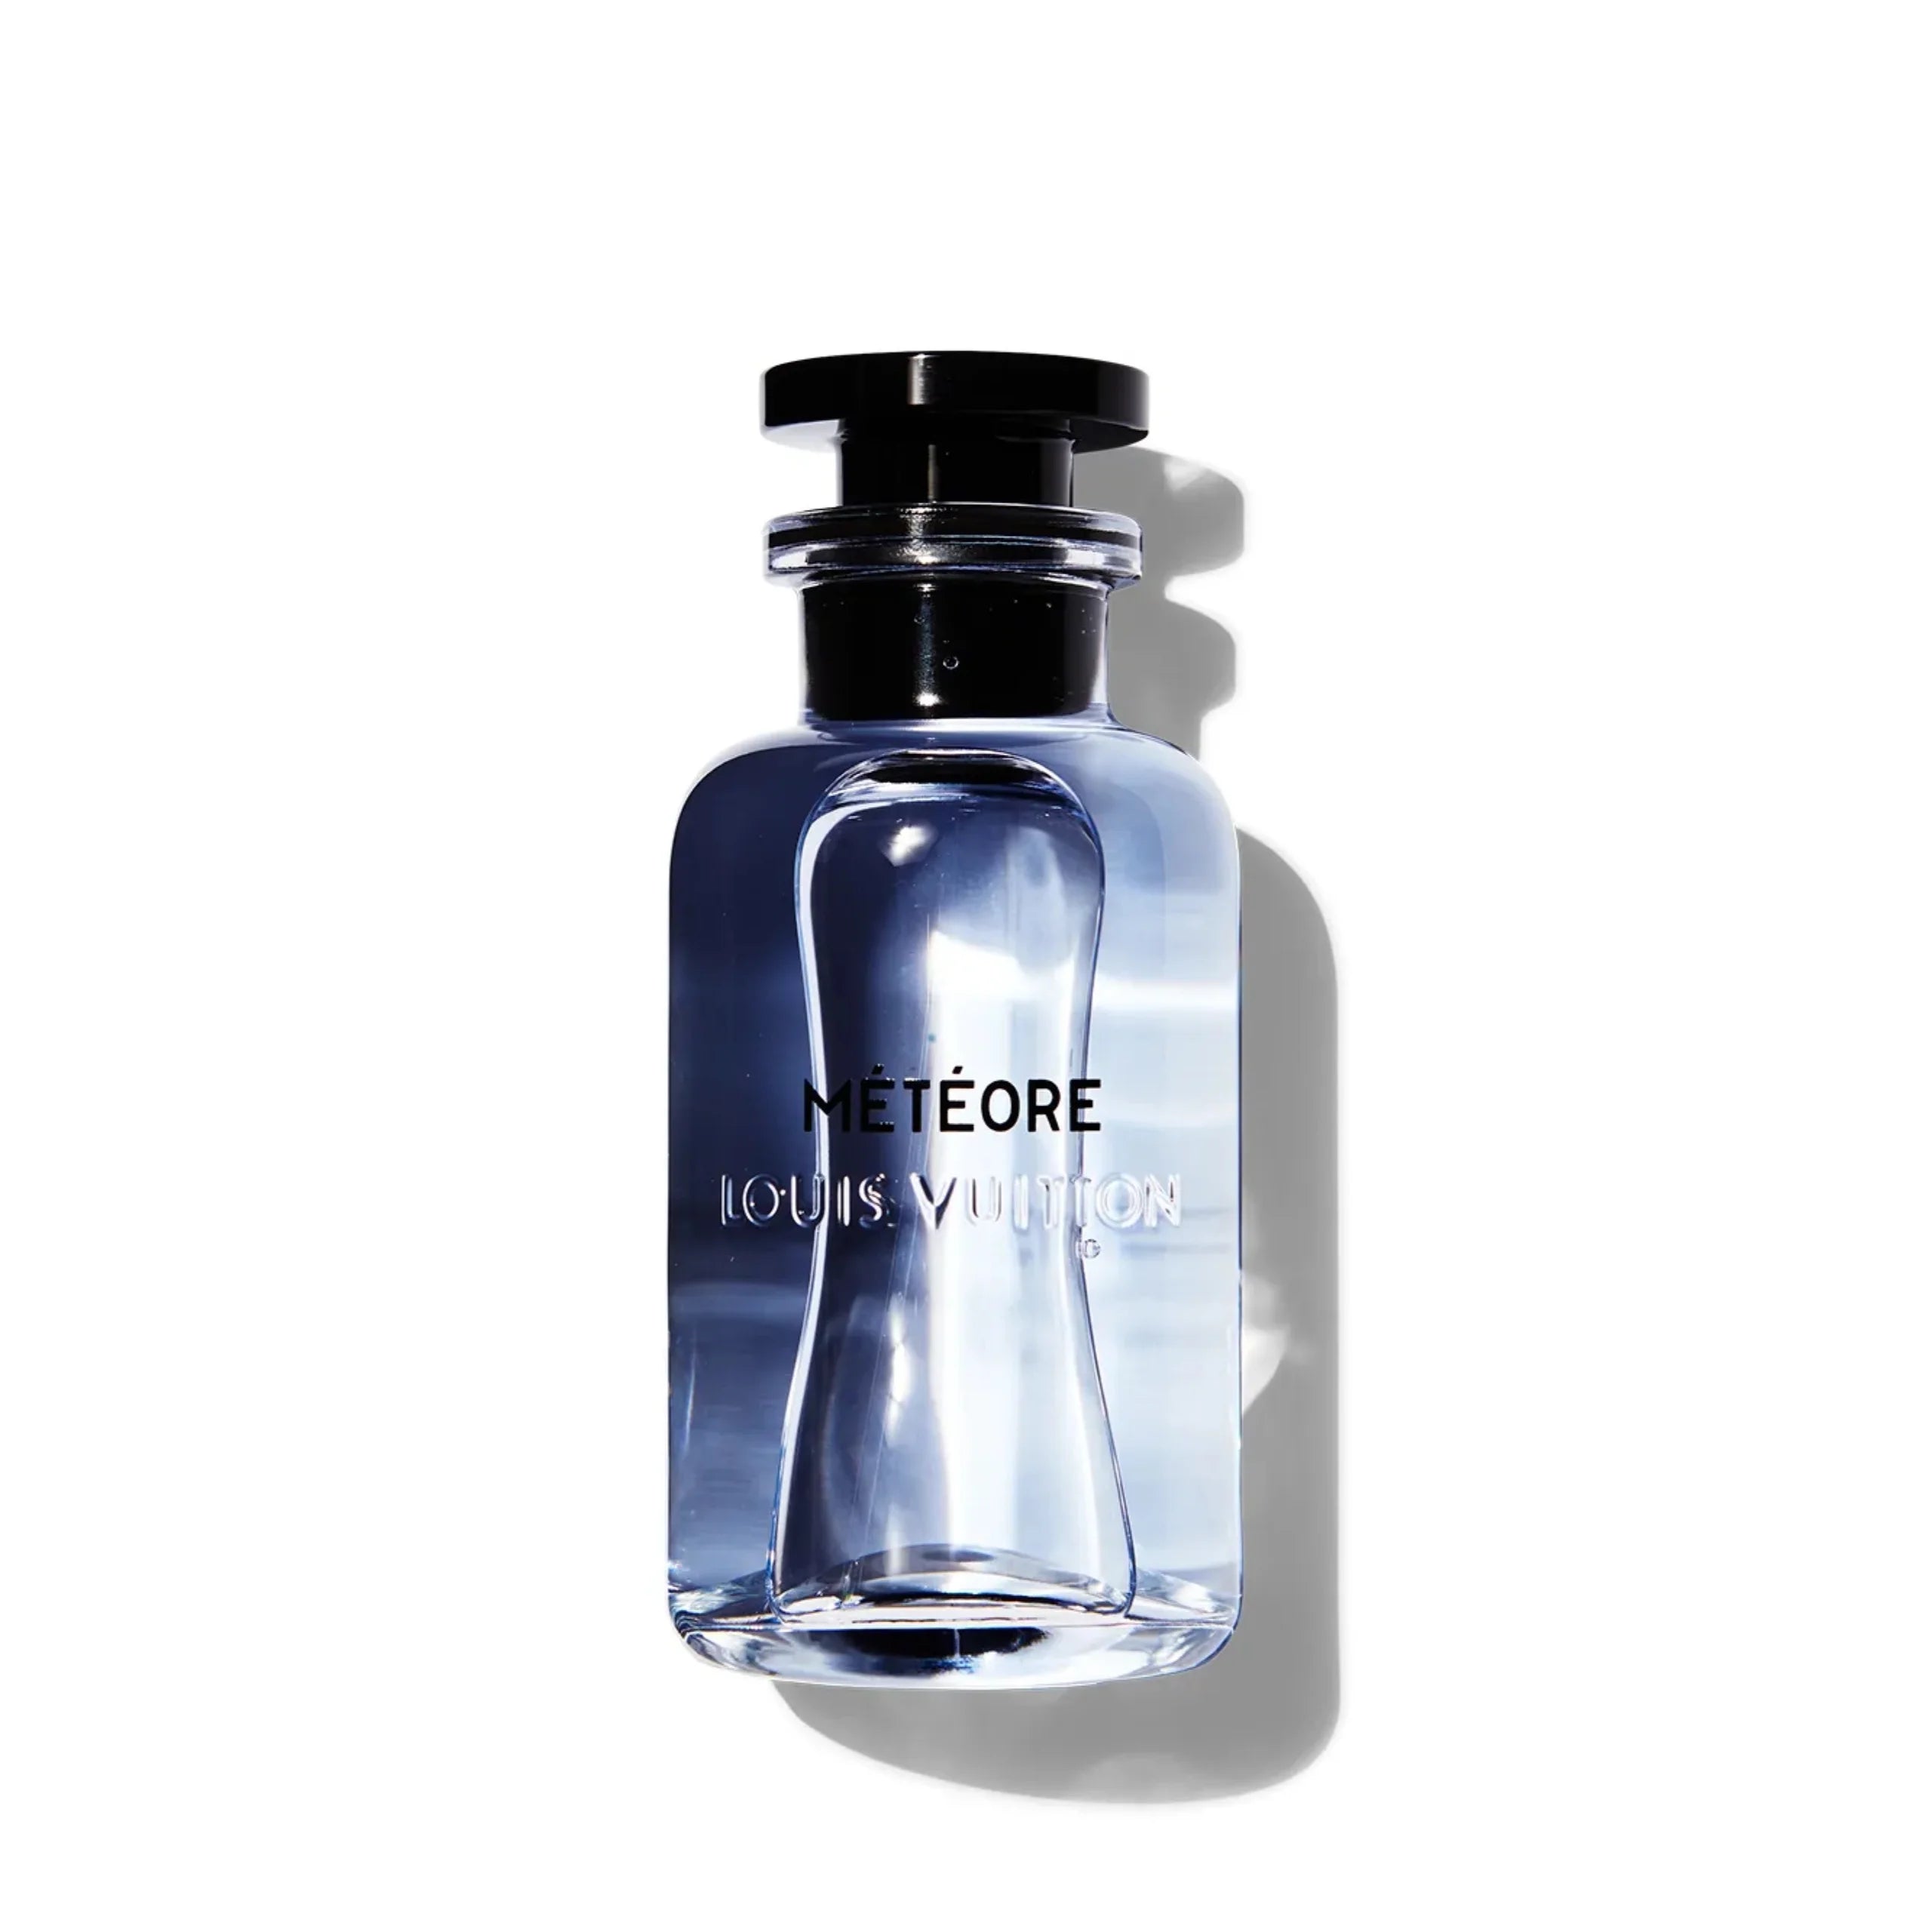 ELIXIR MEN NR 155 /1 sztuka inspirowane zapachem: Louis Vuitton Meteore -  CLASIC